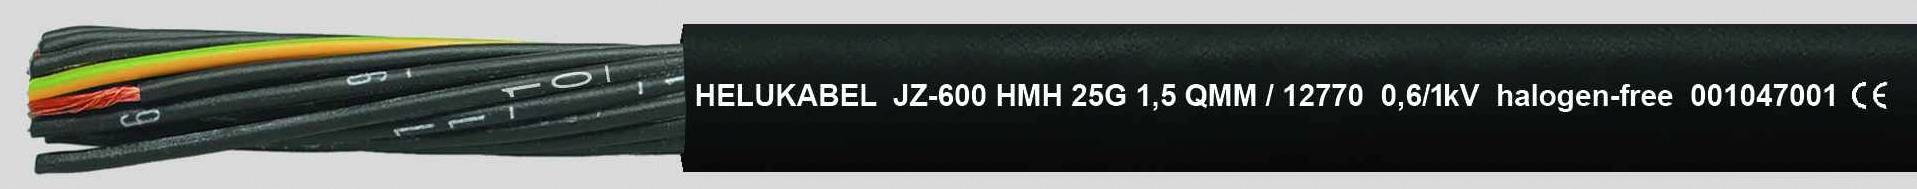 HELUKABEL JZ-500 HMH Steuerleitung 2 x 1.50 mm² Schwarz 12759-1000 1000 m